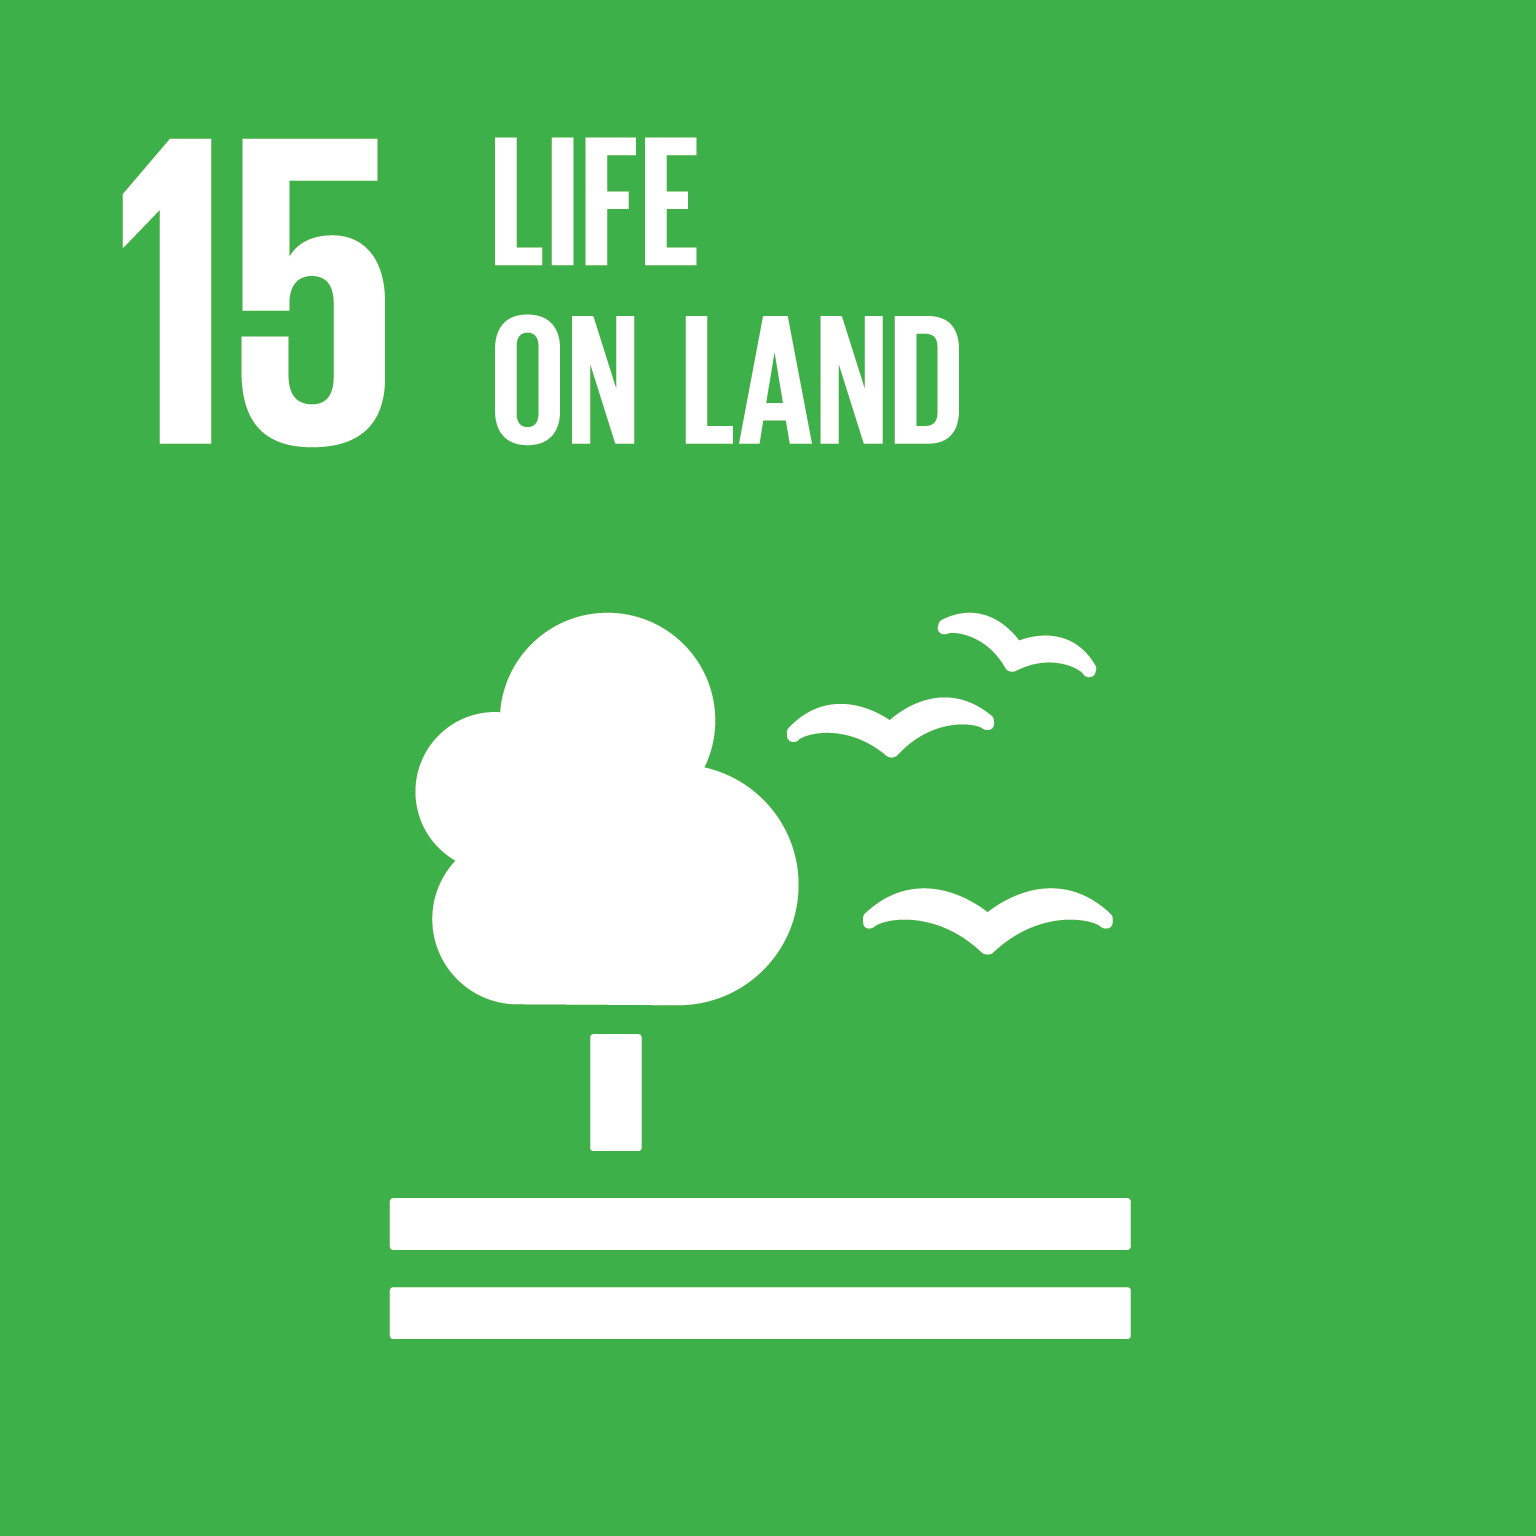 Sustainable Development Goals 15